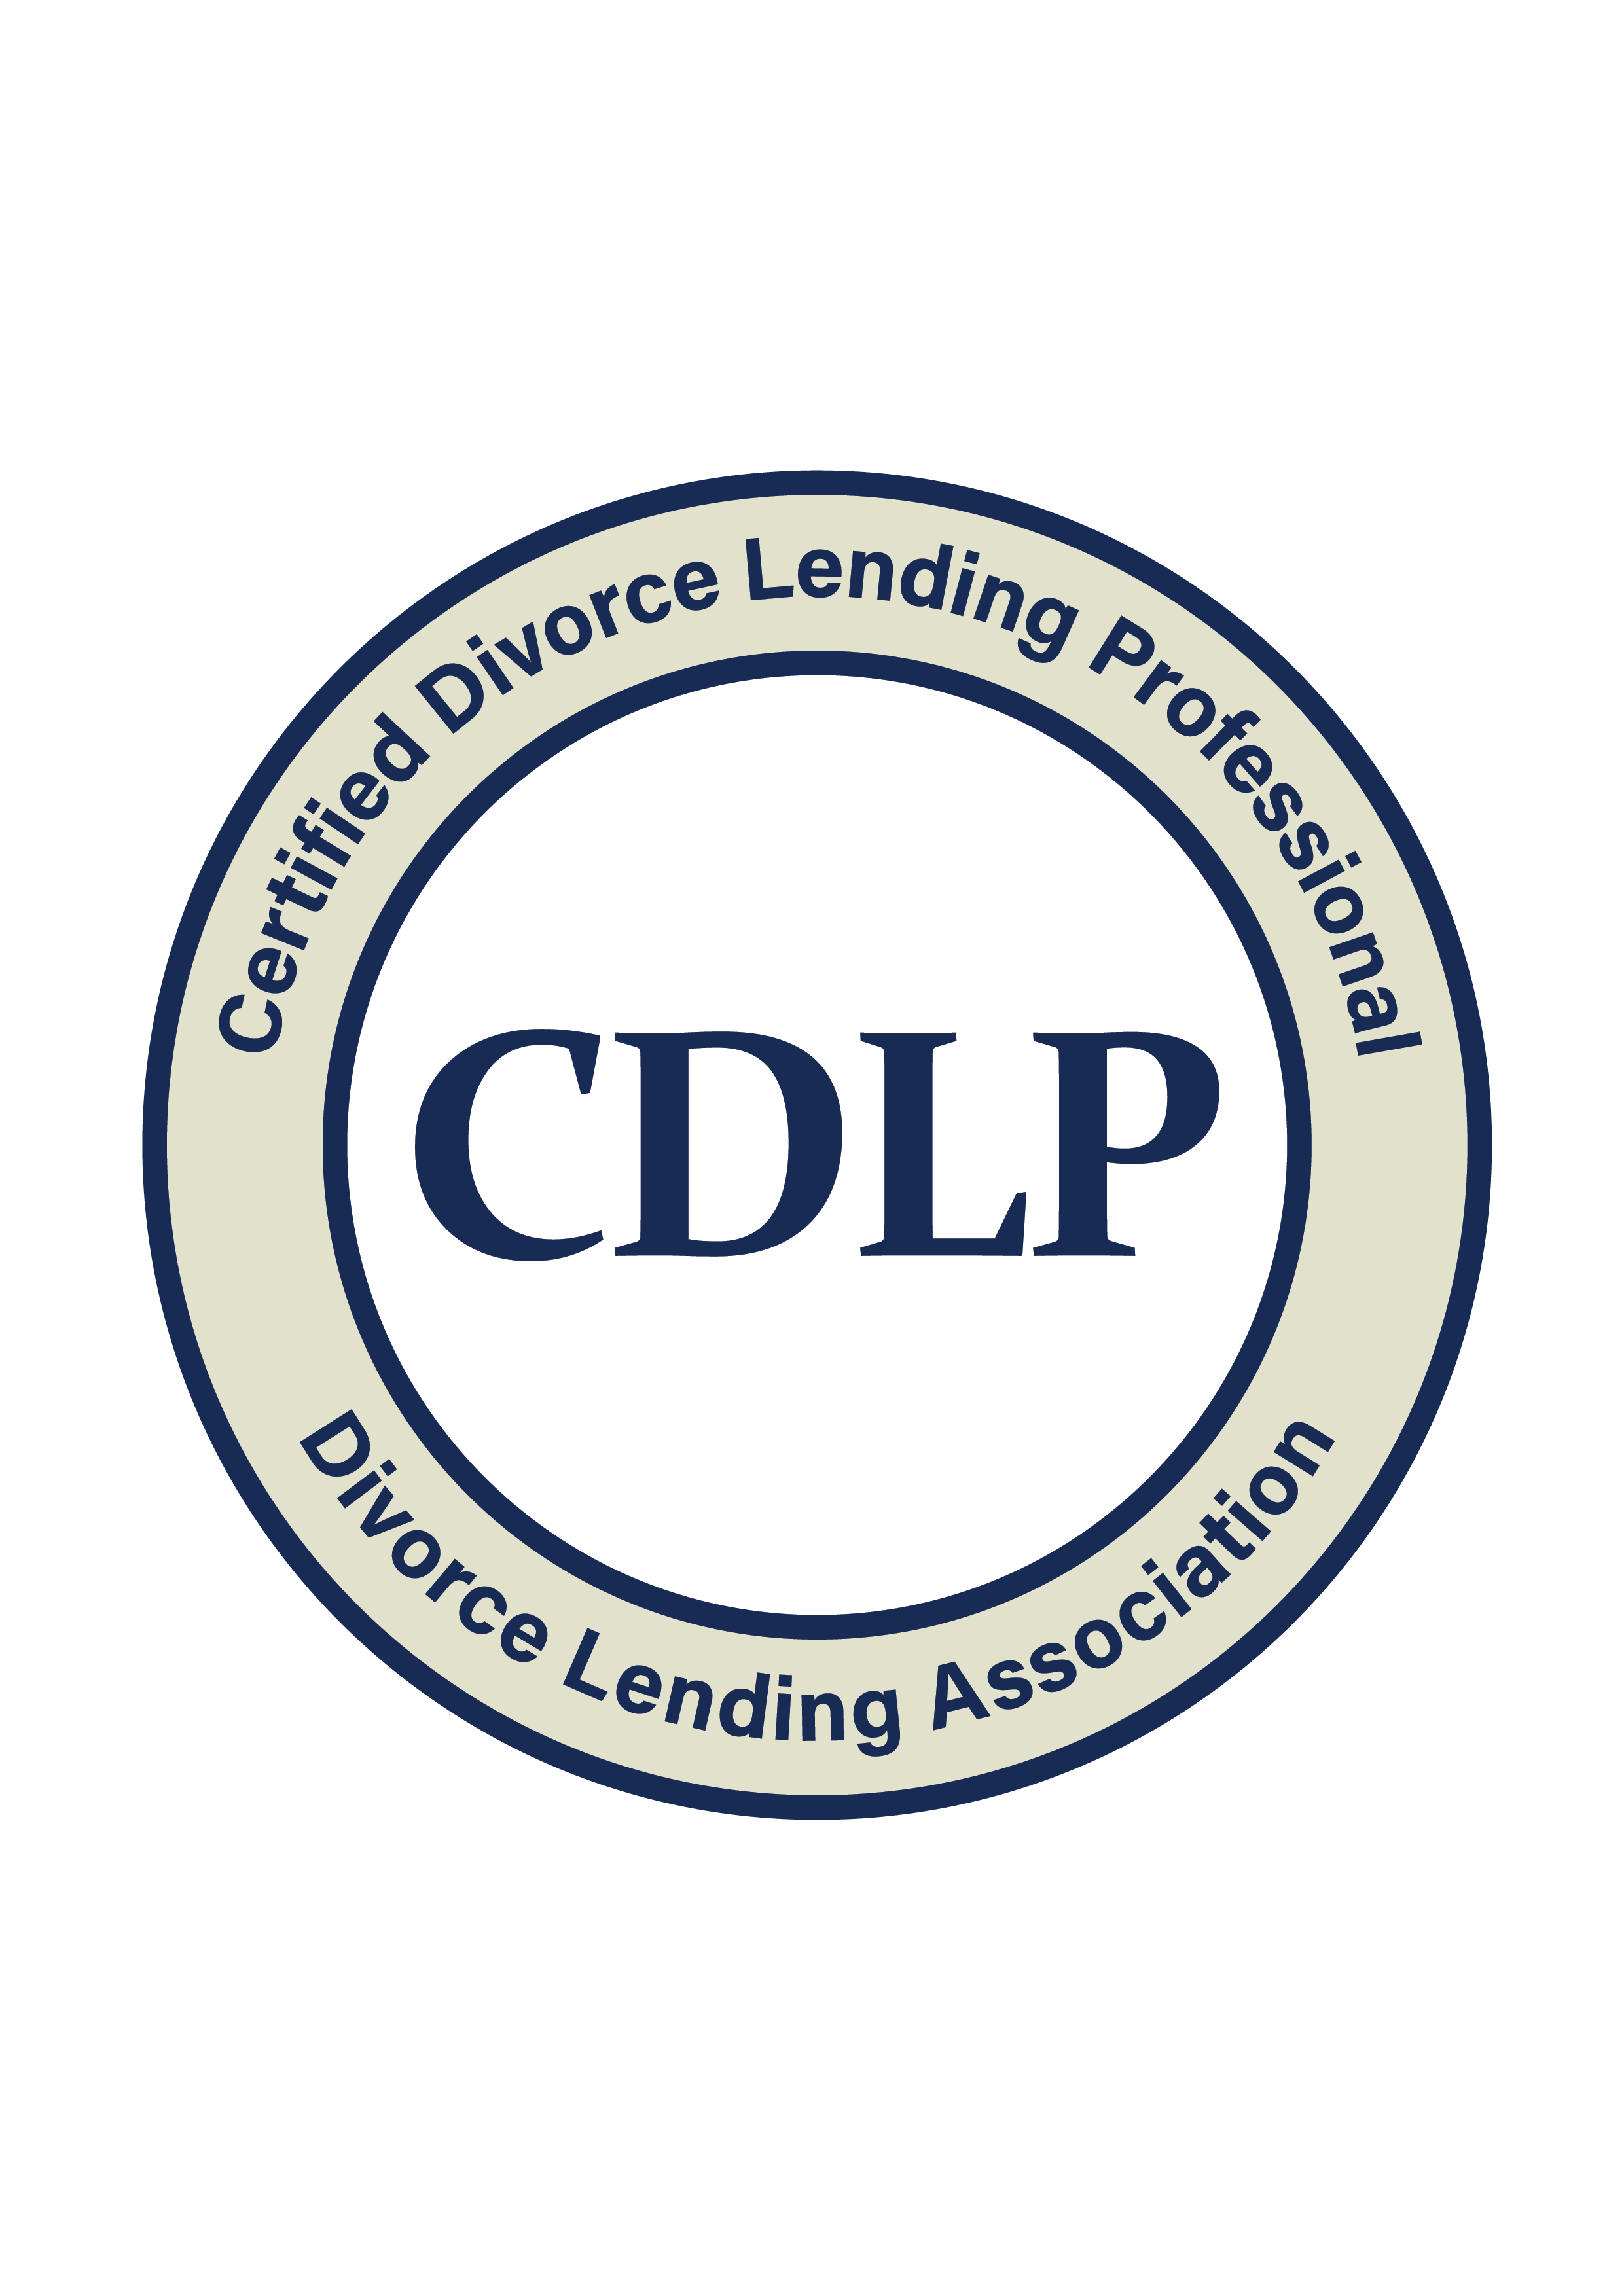 Divorce Lending Professional